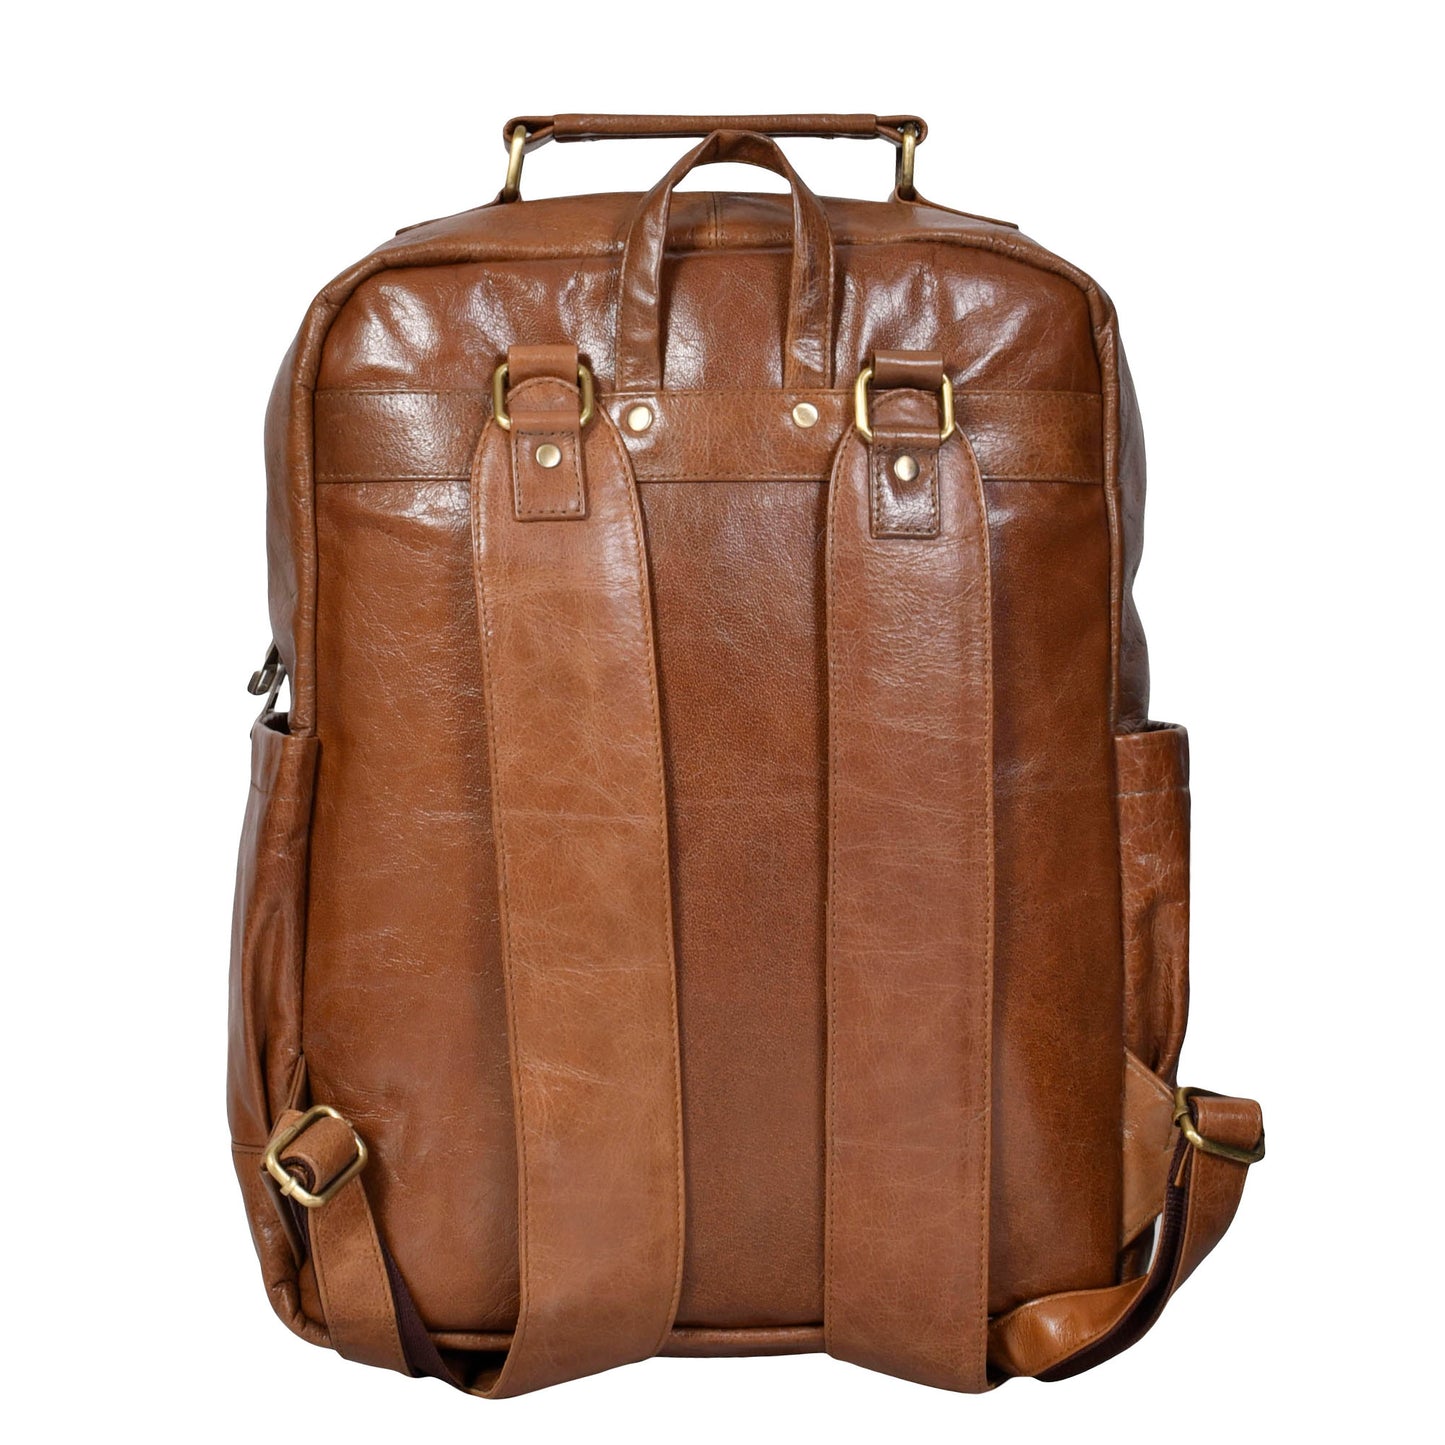 Leather backpack Minimal in Tan brown